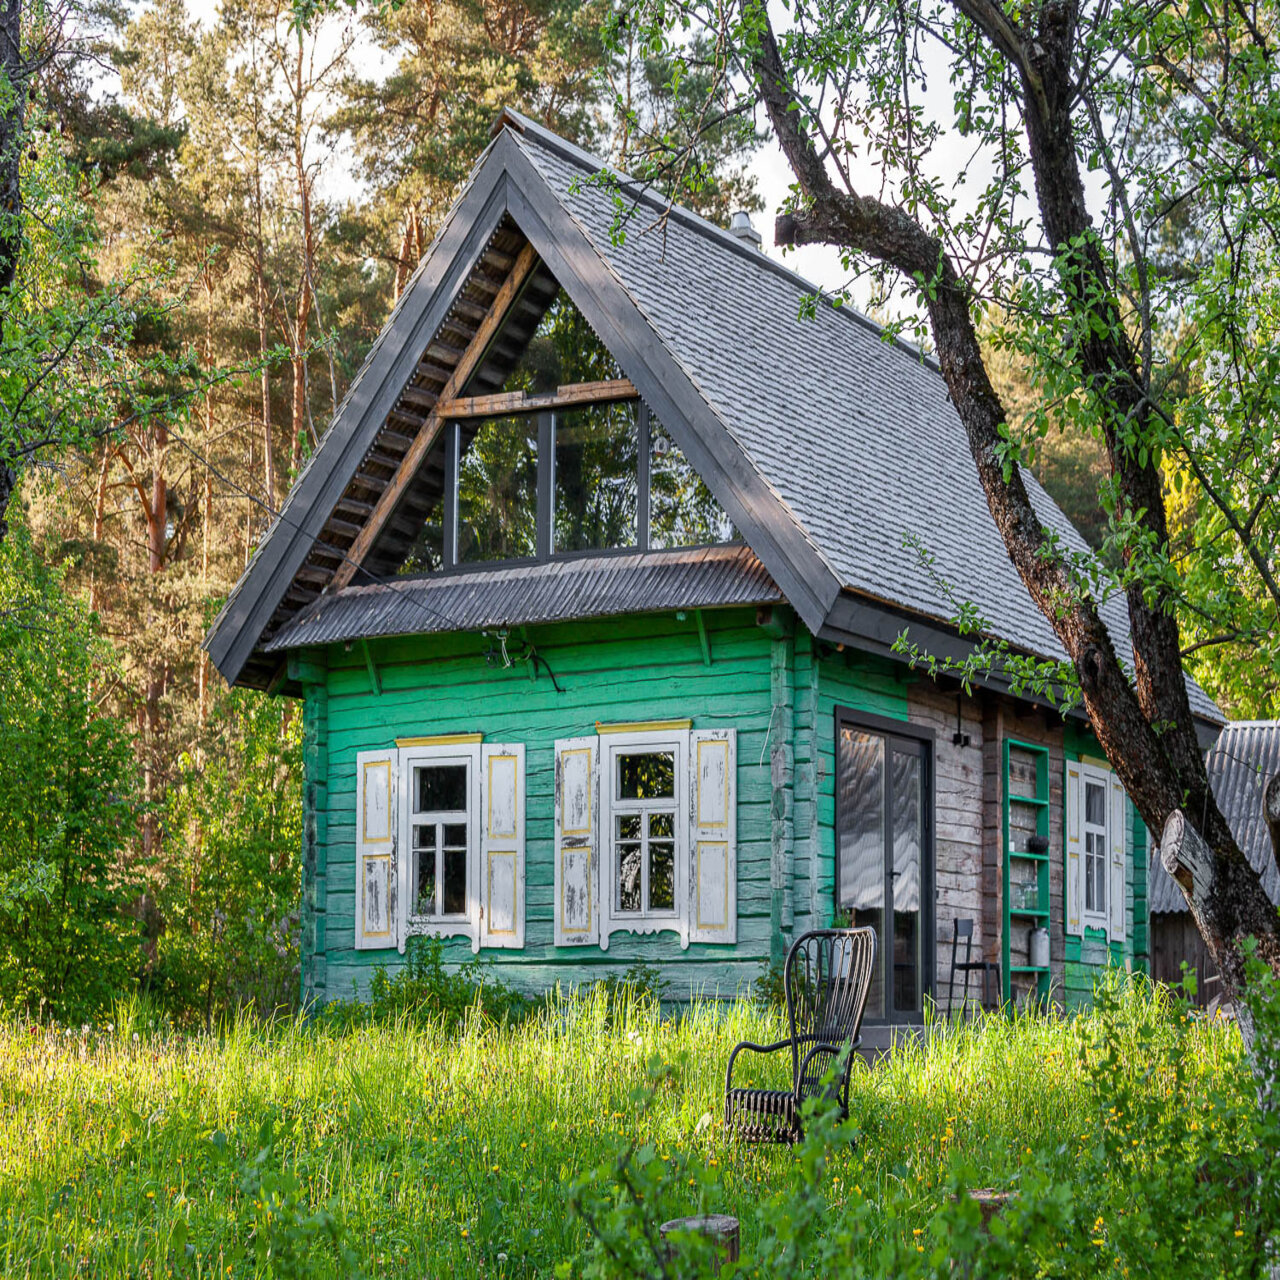 Ремонт деревянного дома